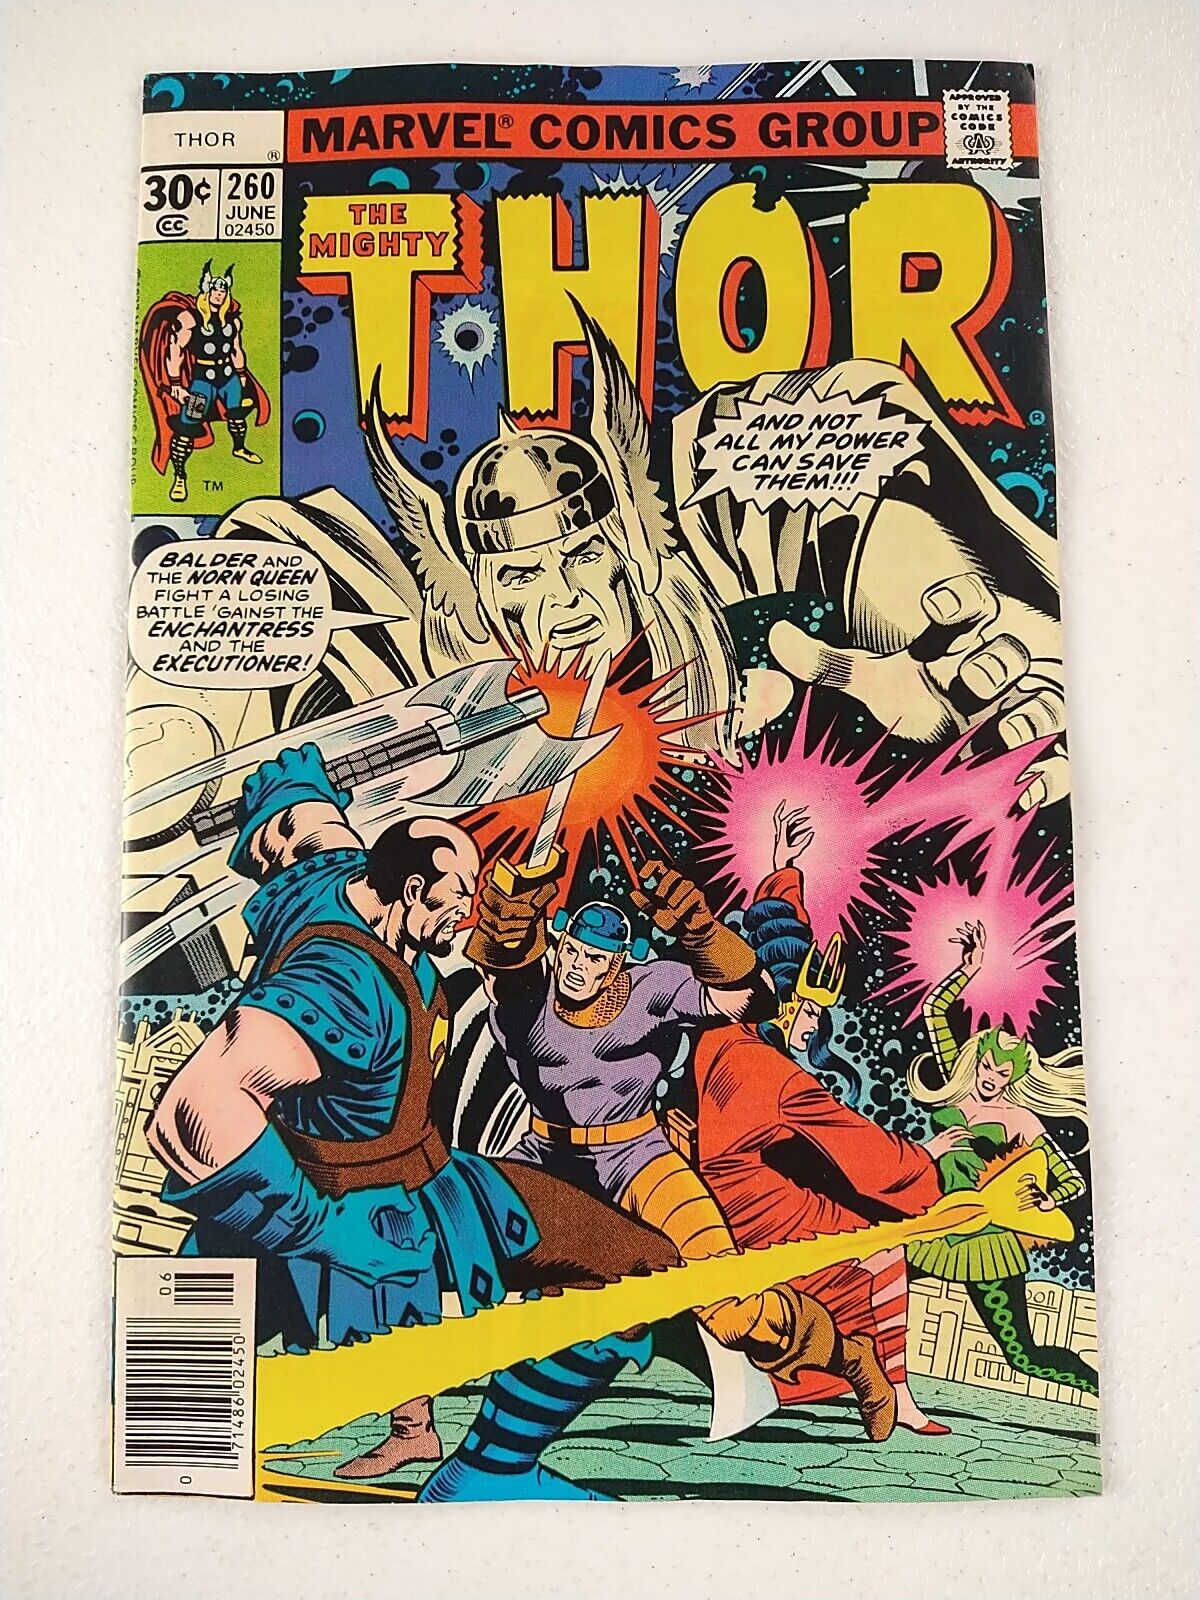 The Mighty Thor #260 (1977 Marvel Comics) VF+ Balder the Brave, Enchantress